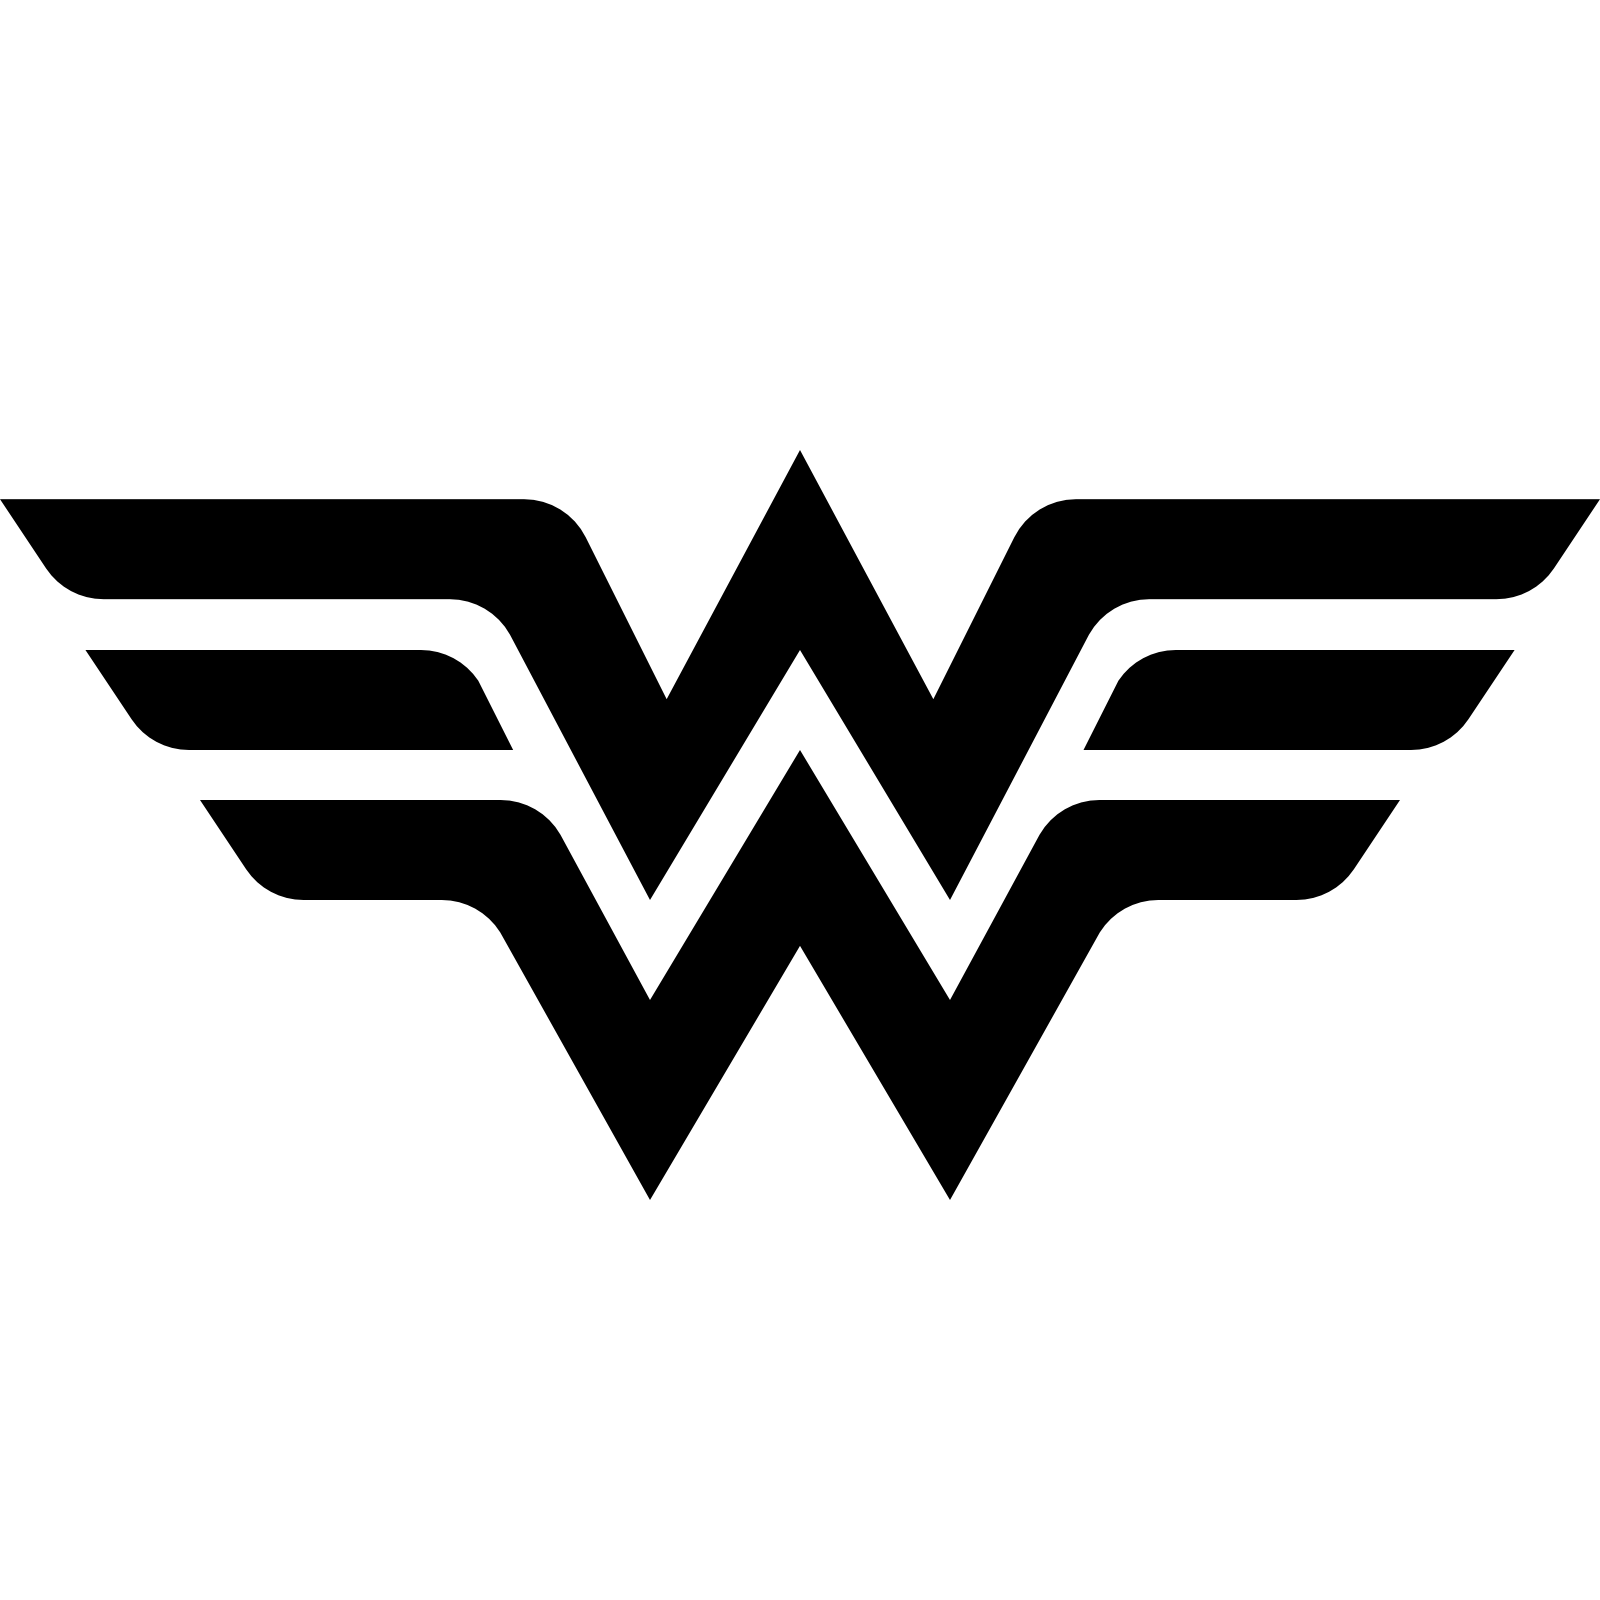 Free Wonder Woman Font - ClipArt Best